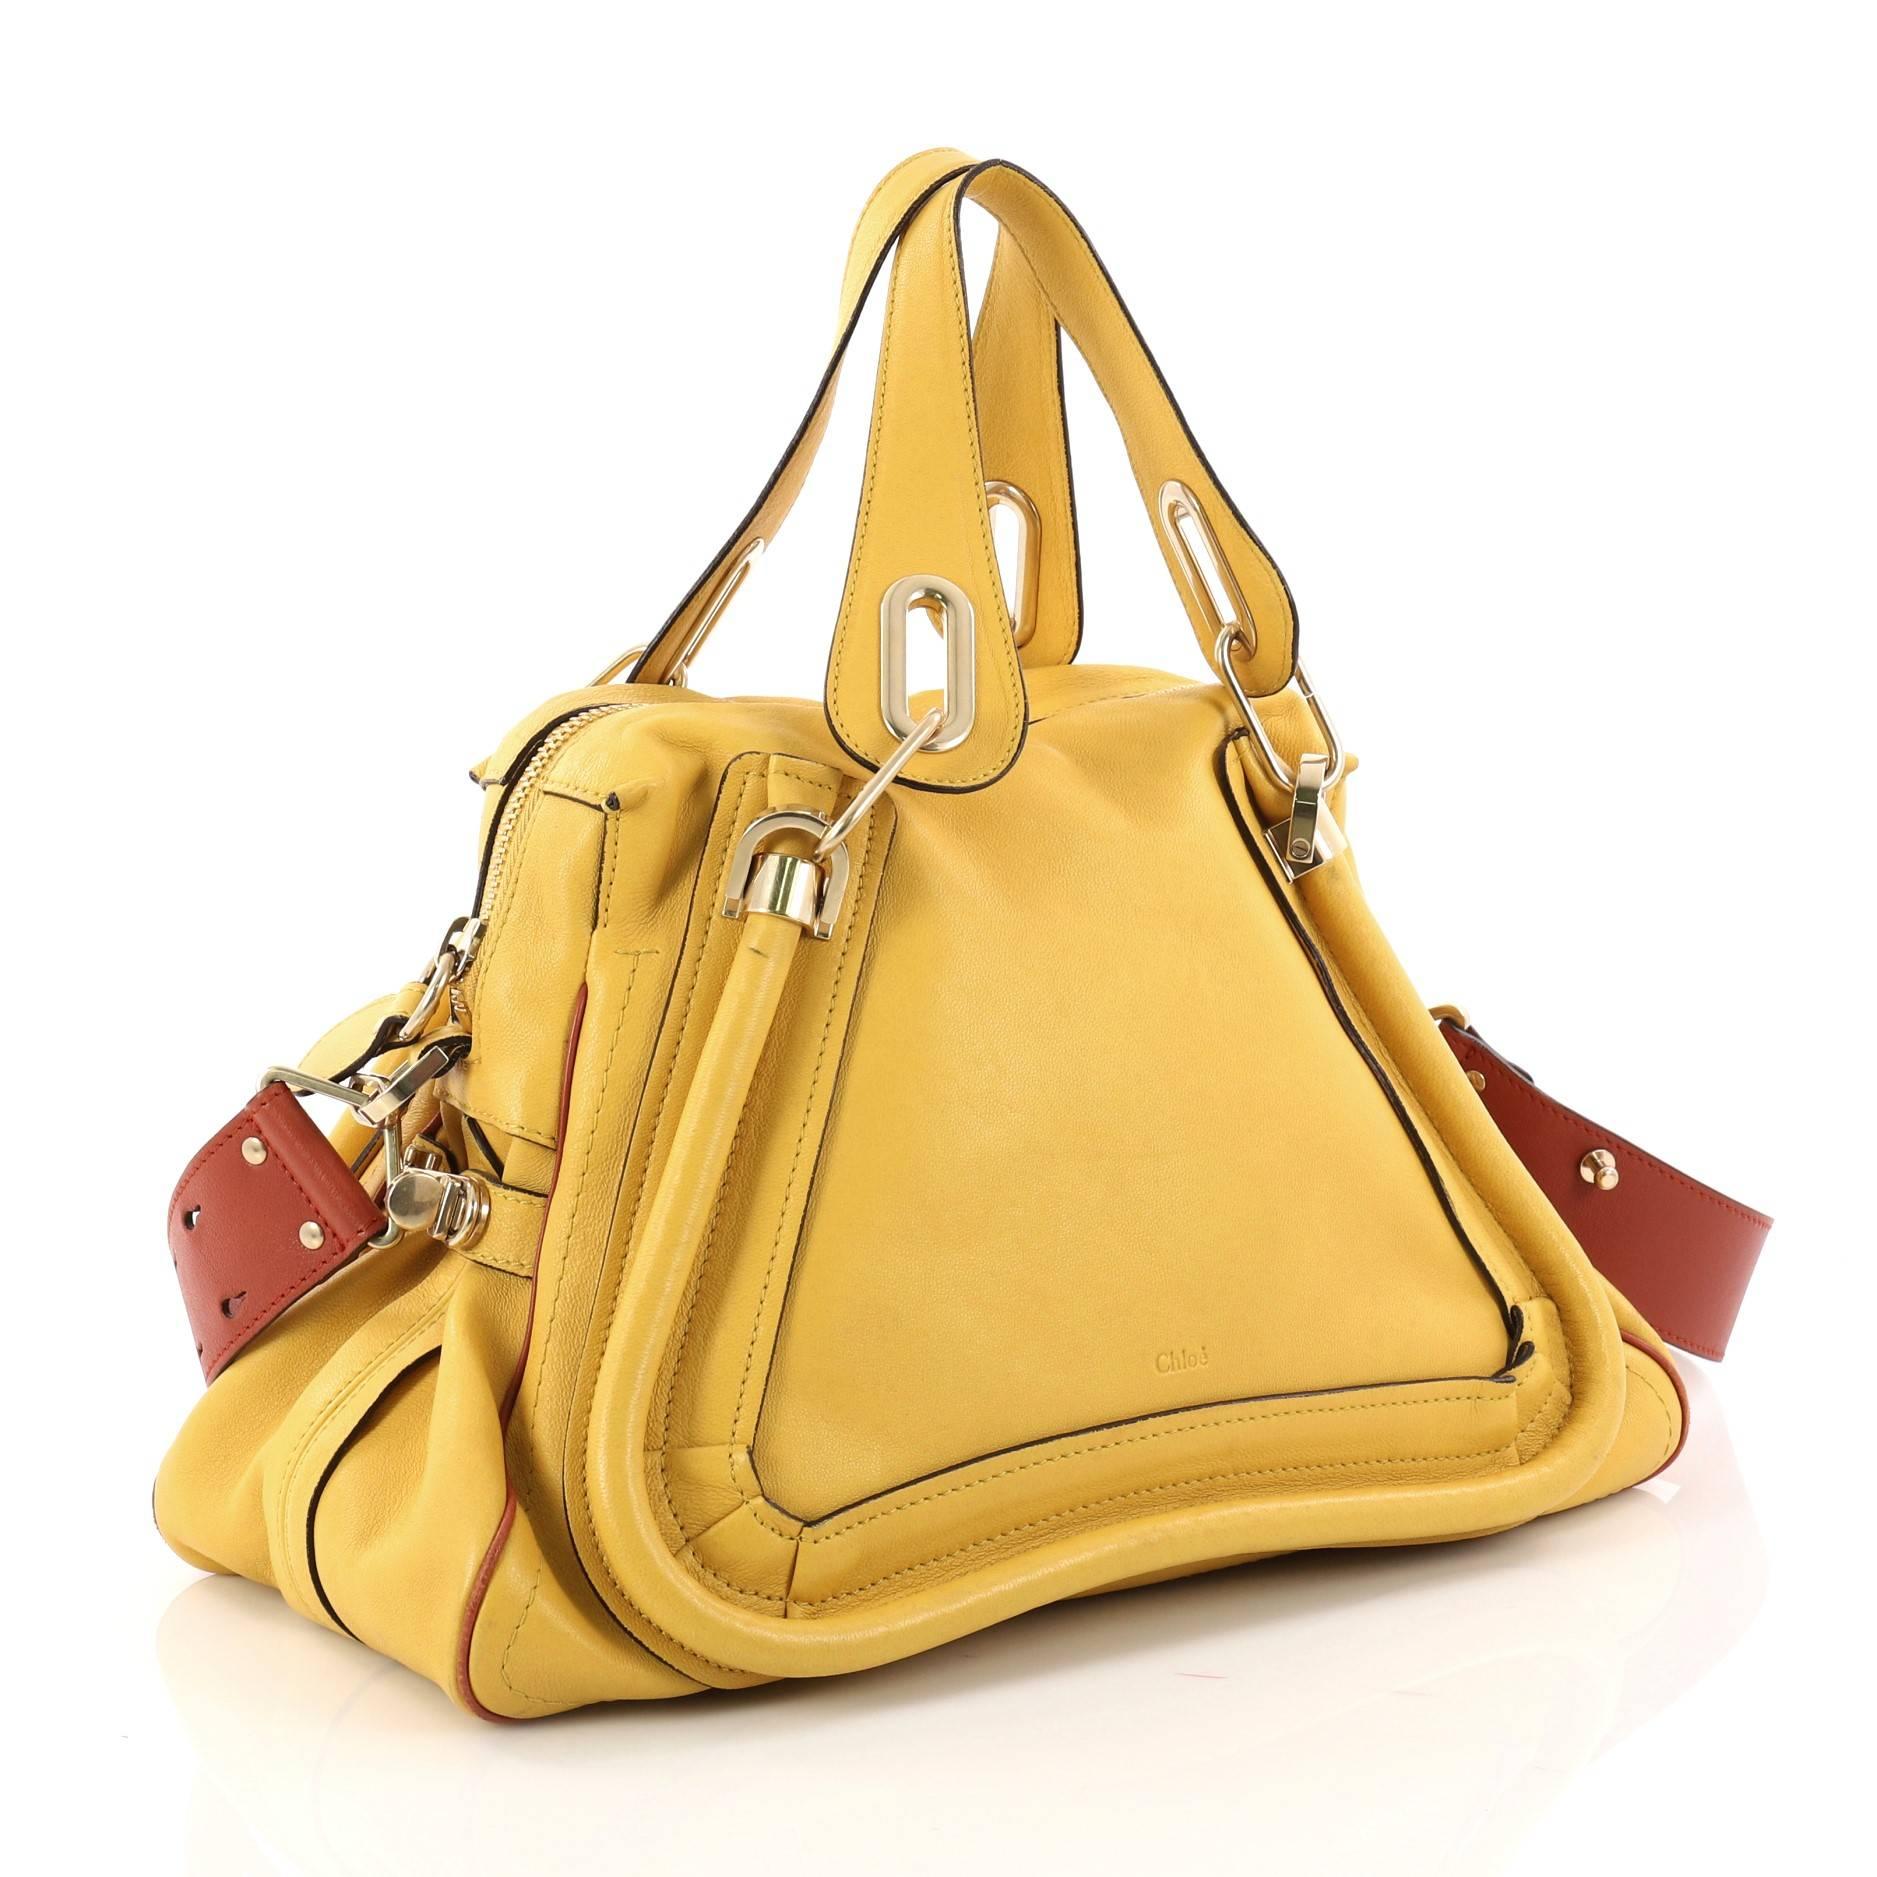 Orange Chloe Paraty Top Handle Bag Leather Medium